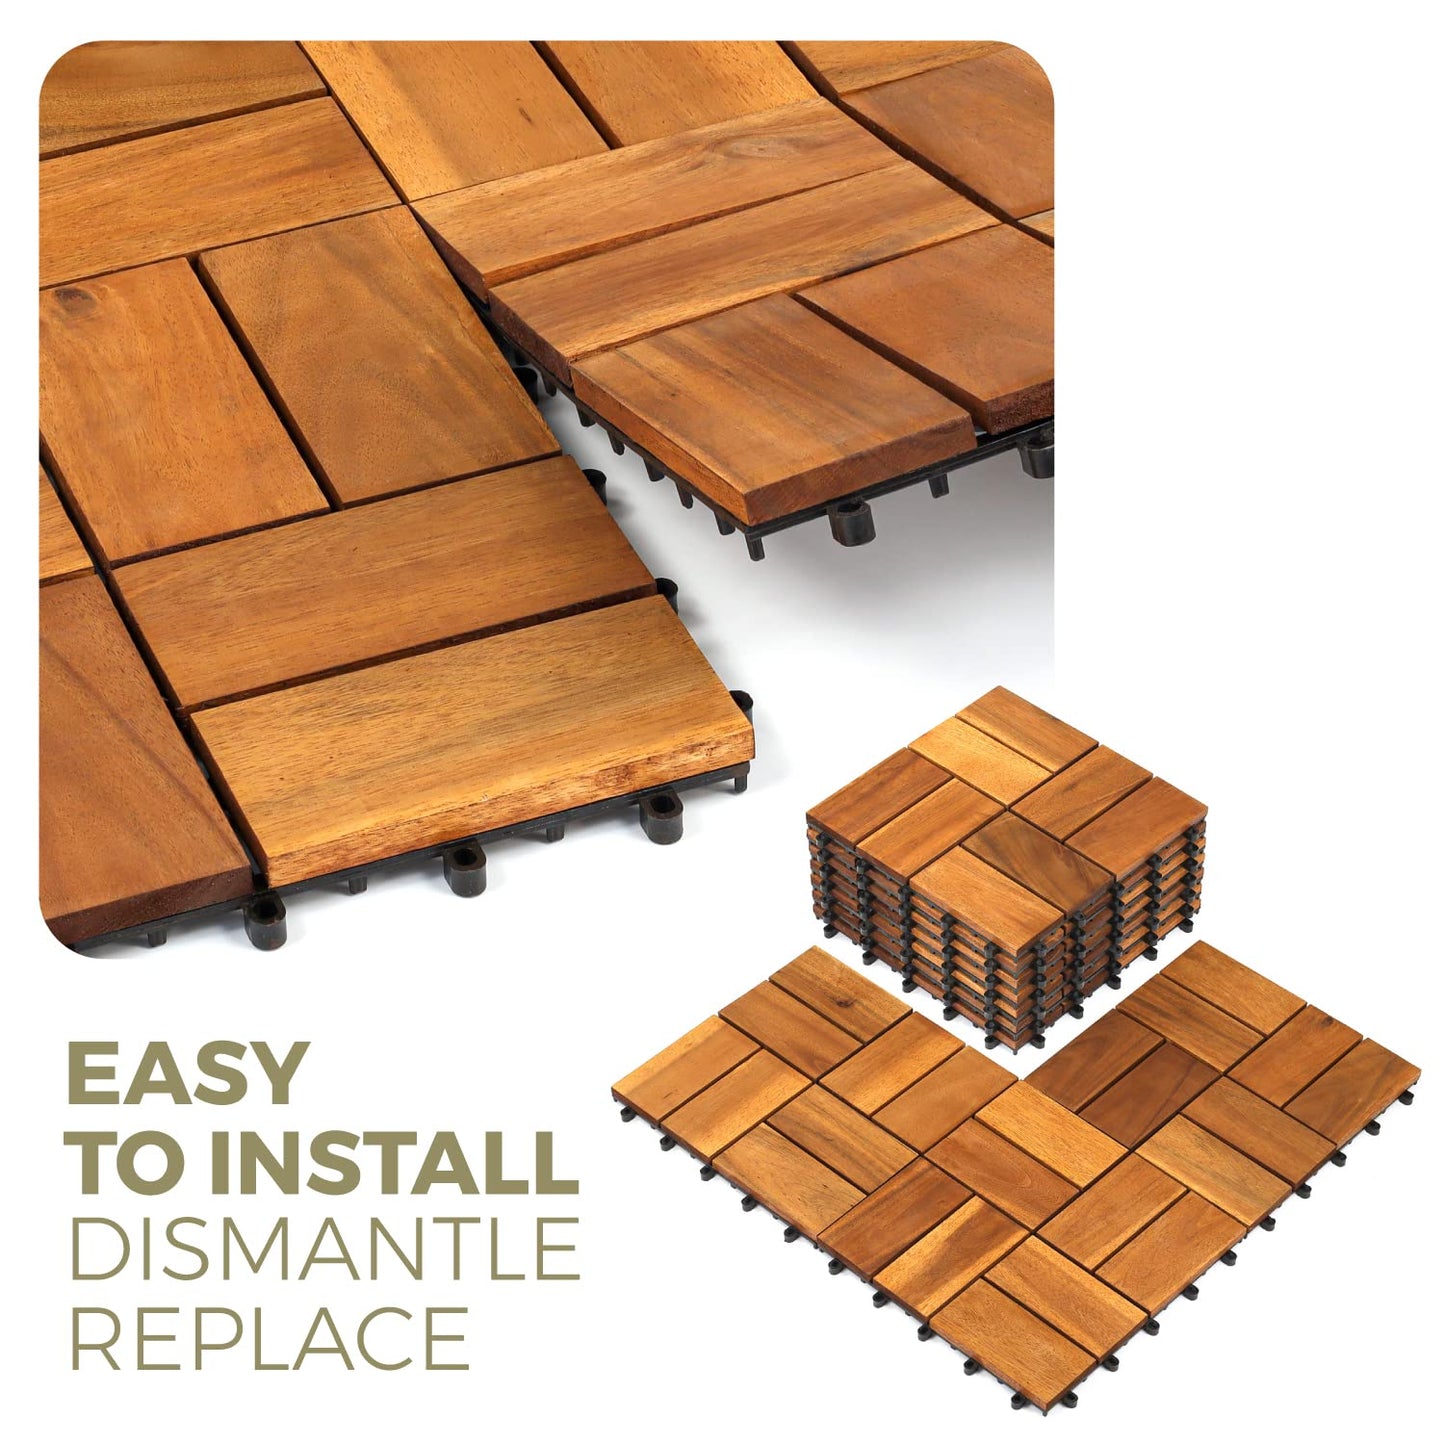 Solid Wood Interlocking Flooring Tiles (Pack of 10, 12" x 12"), Acacia Deck Tiles, Floor Tiles for Both Indoor and Outdoor Use, Waterproof All